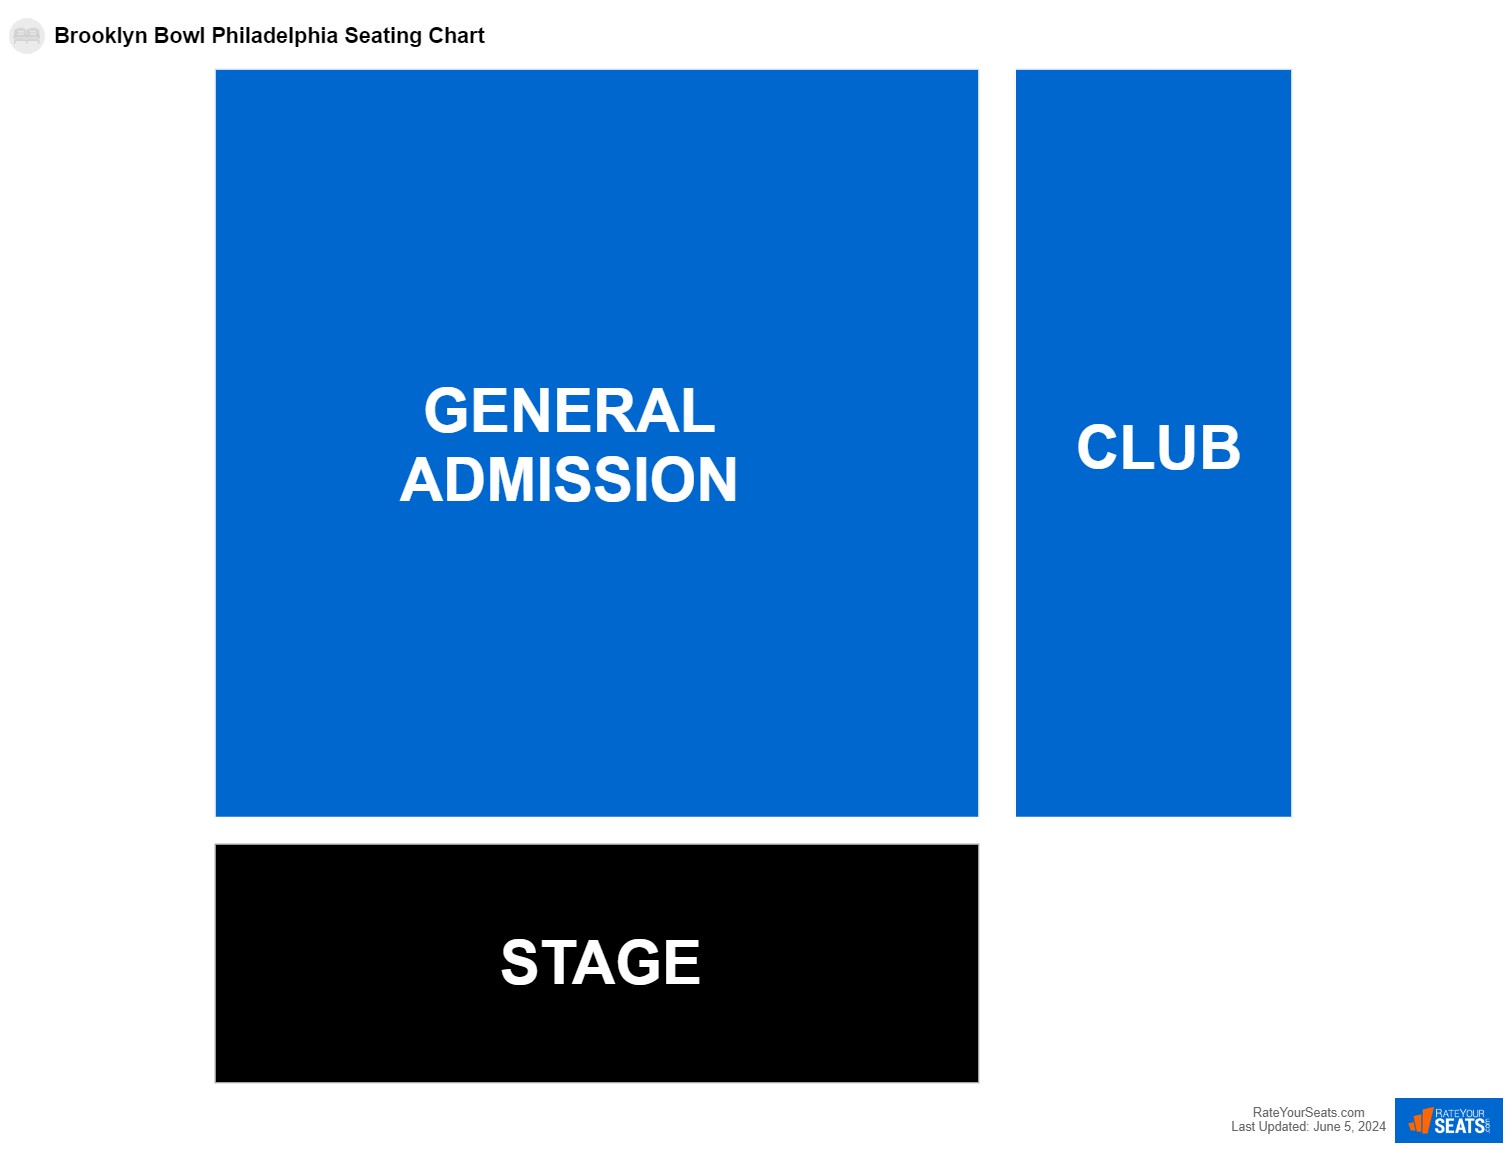 Concert seating chart at Brooklyn Bowl Philadelphia